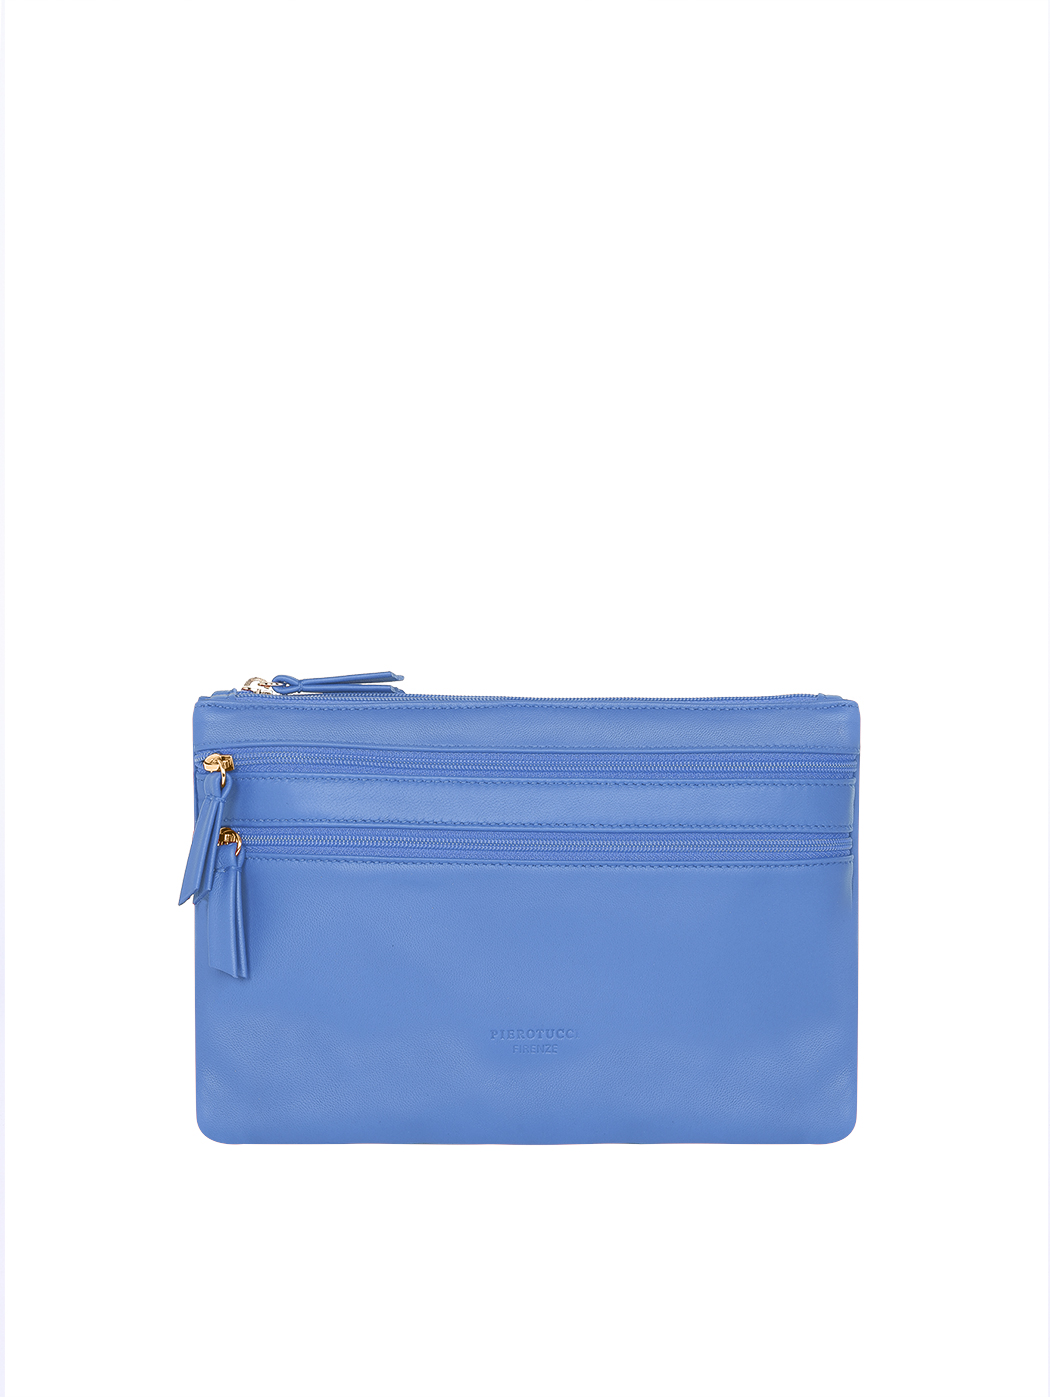 Sky Blue Convertible Crossbody Clutch Bag